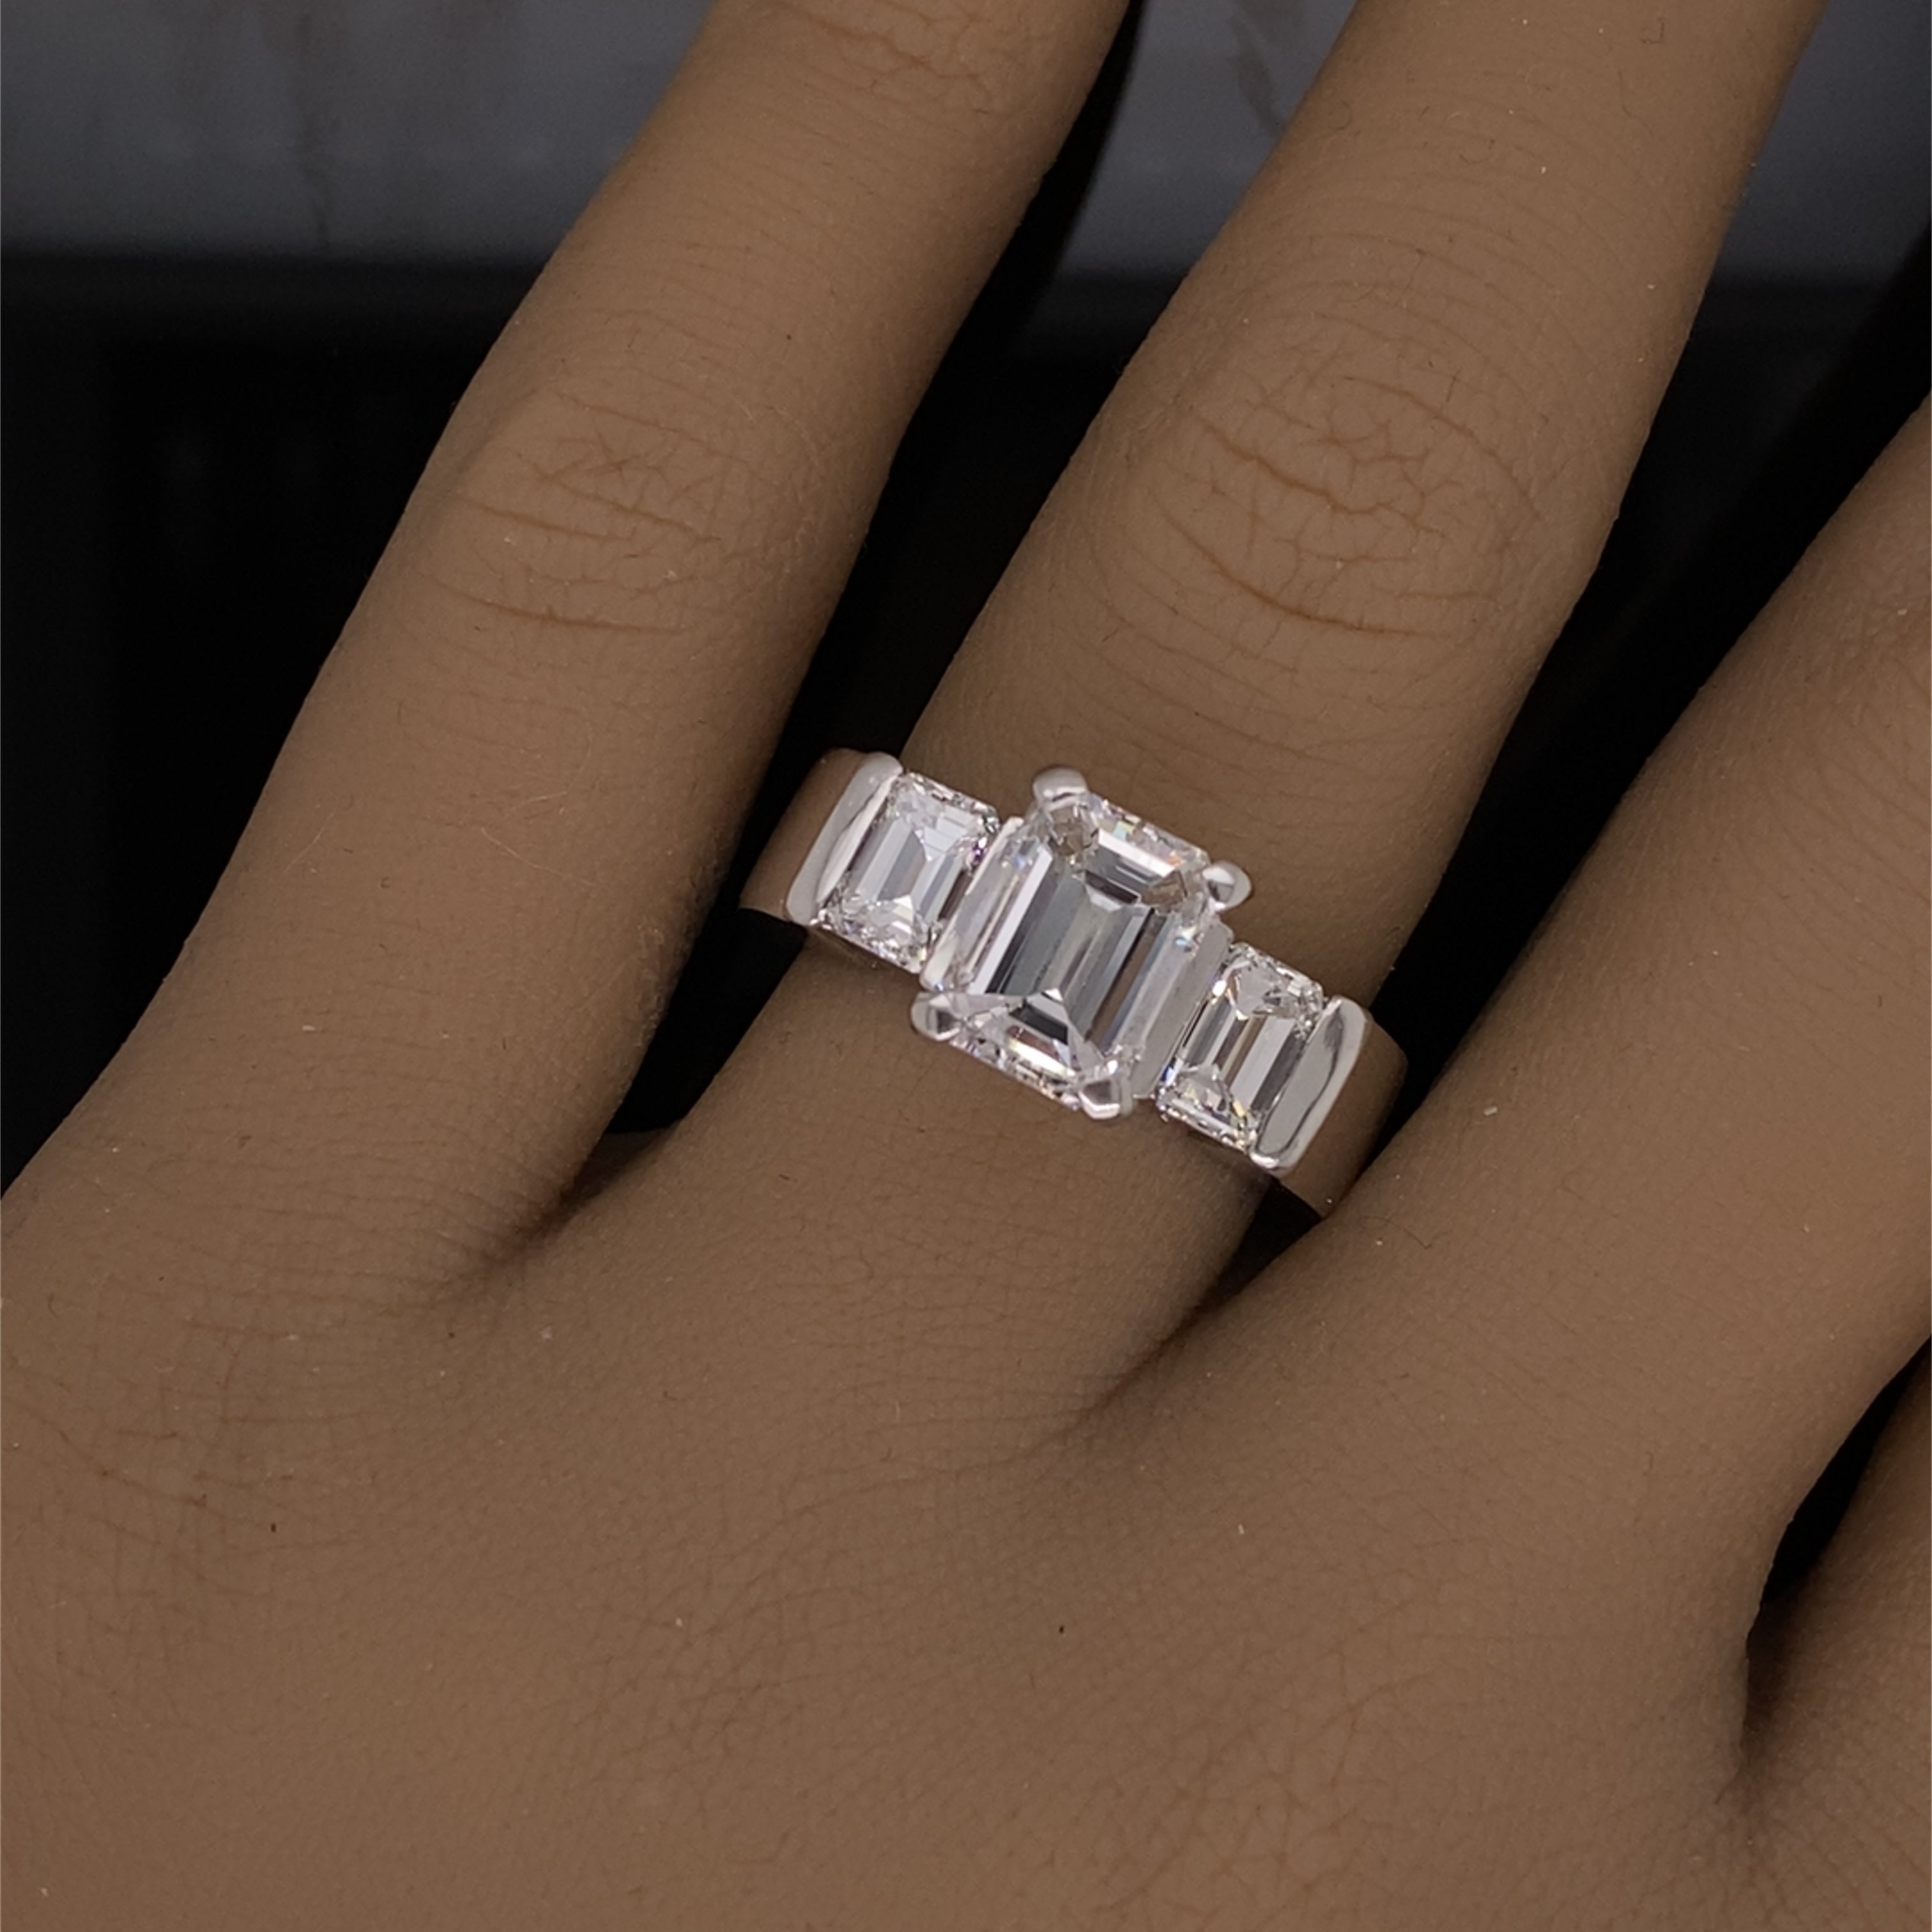 Emerald Cut Engagement Rings From Adiamor Are Timeless | Adiamor